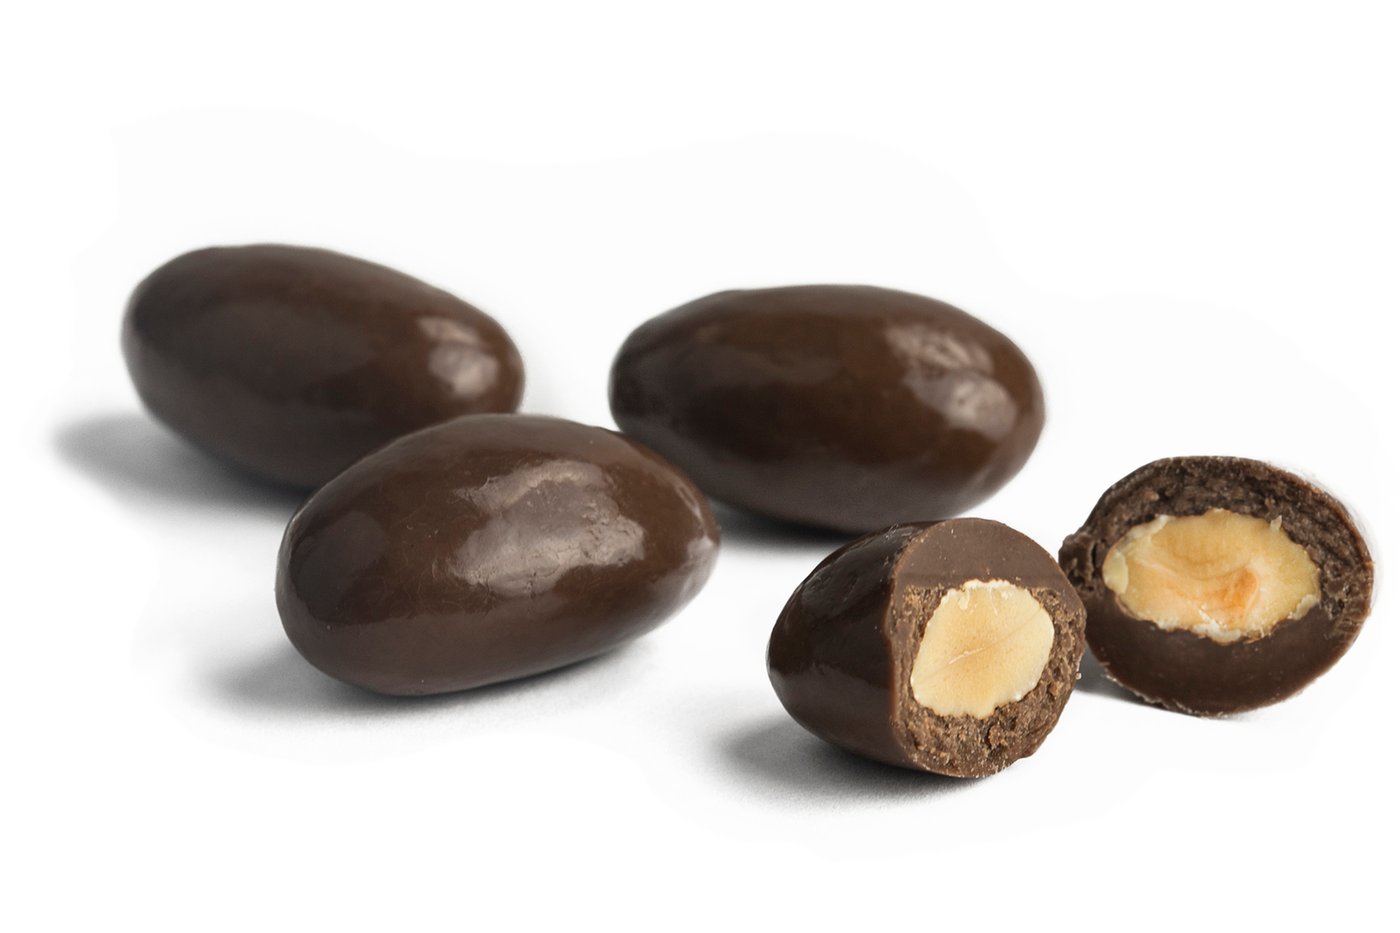 Chocolate-Covered Almonds (Sugar-Free) photo